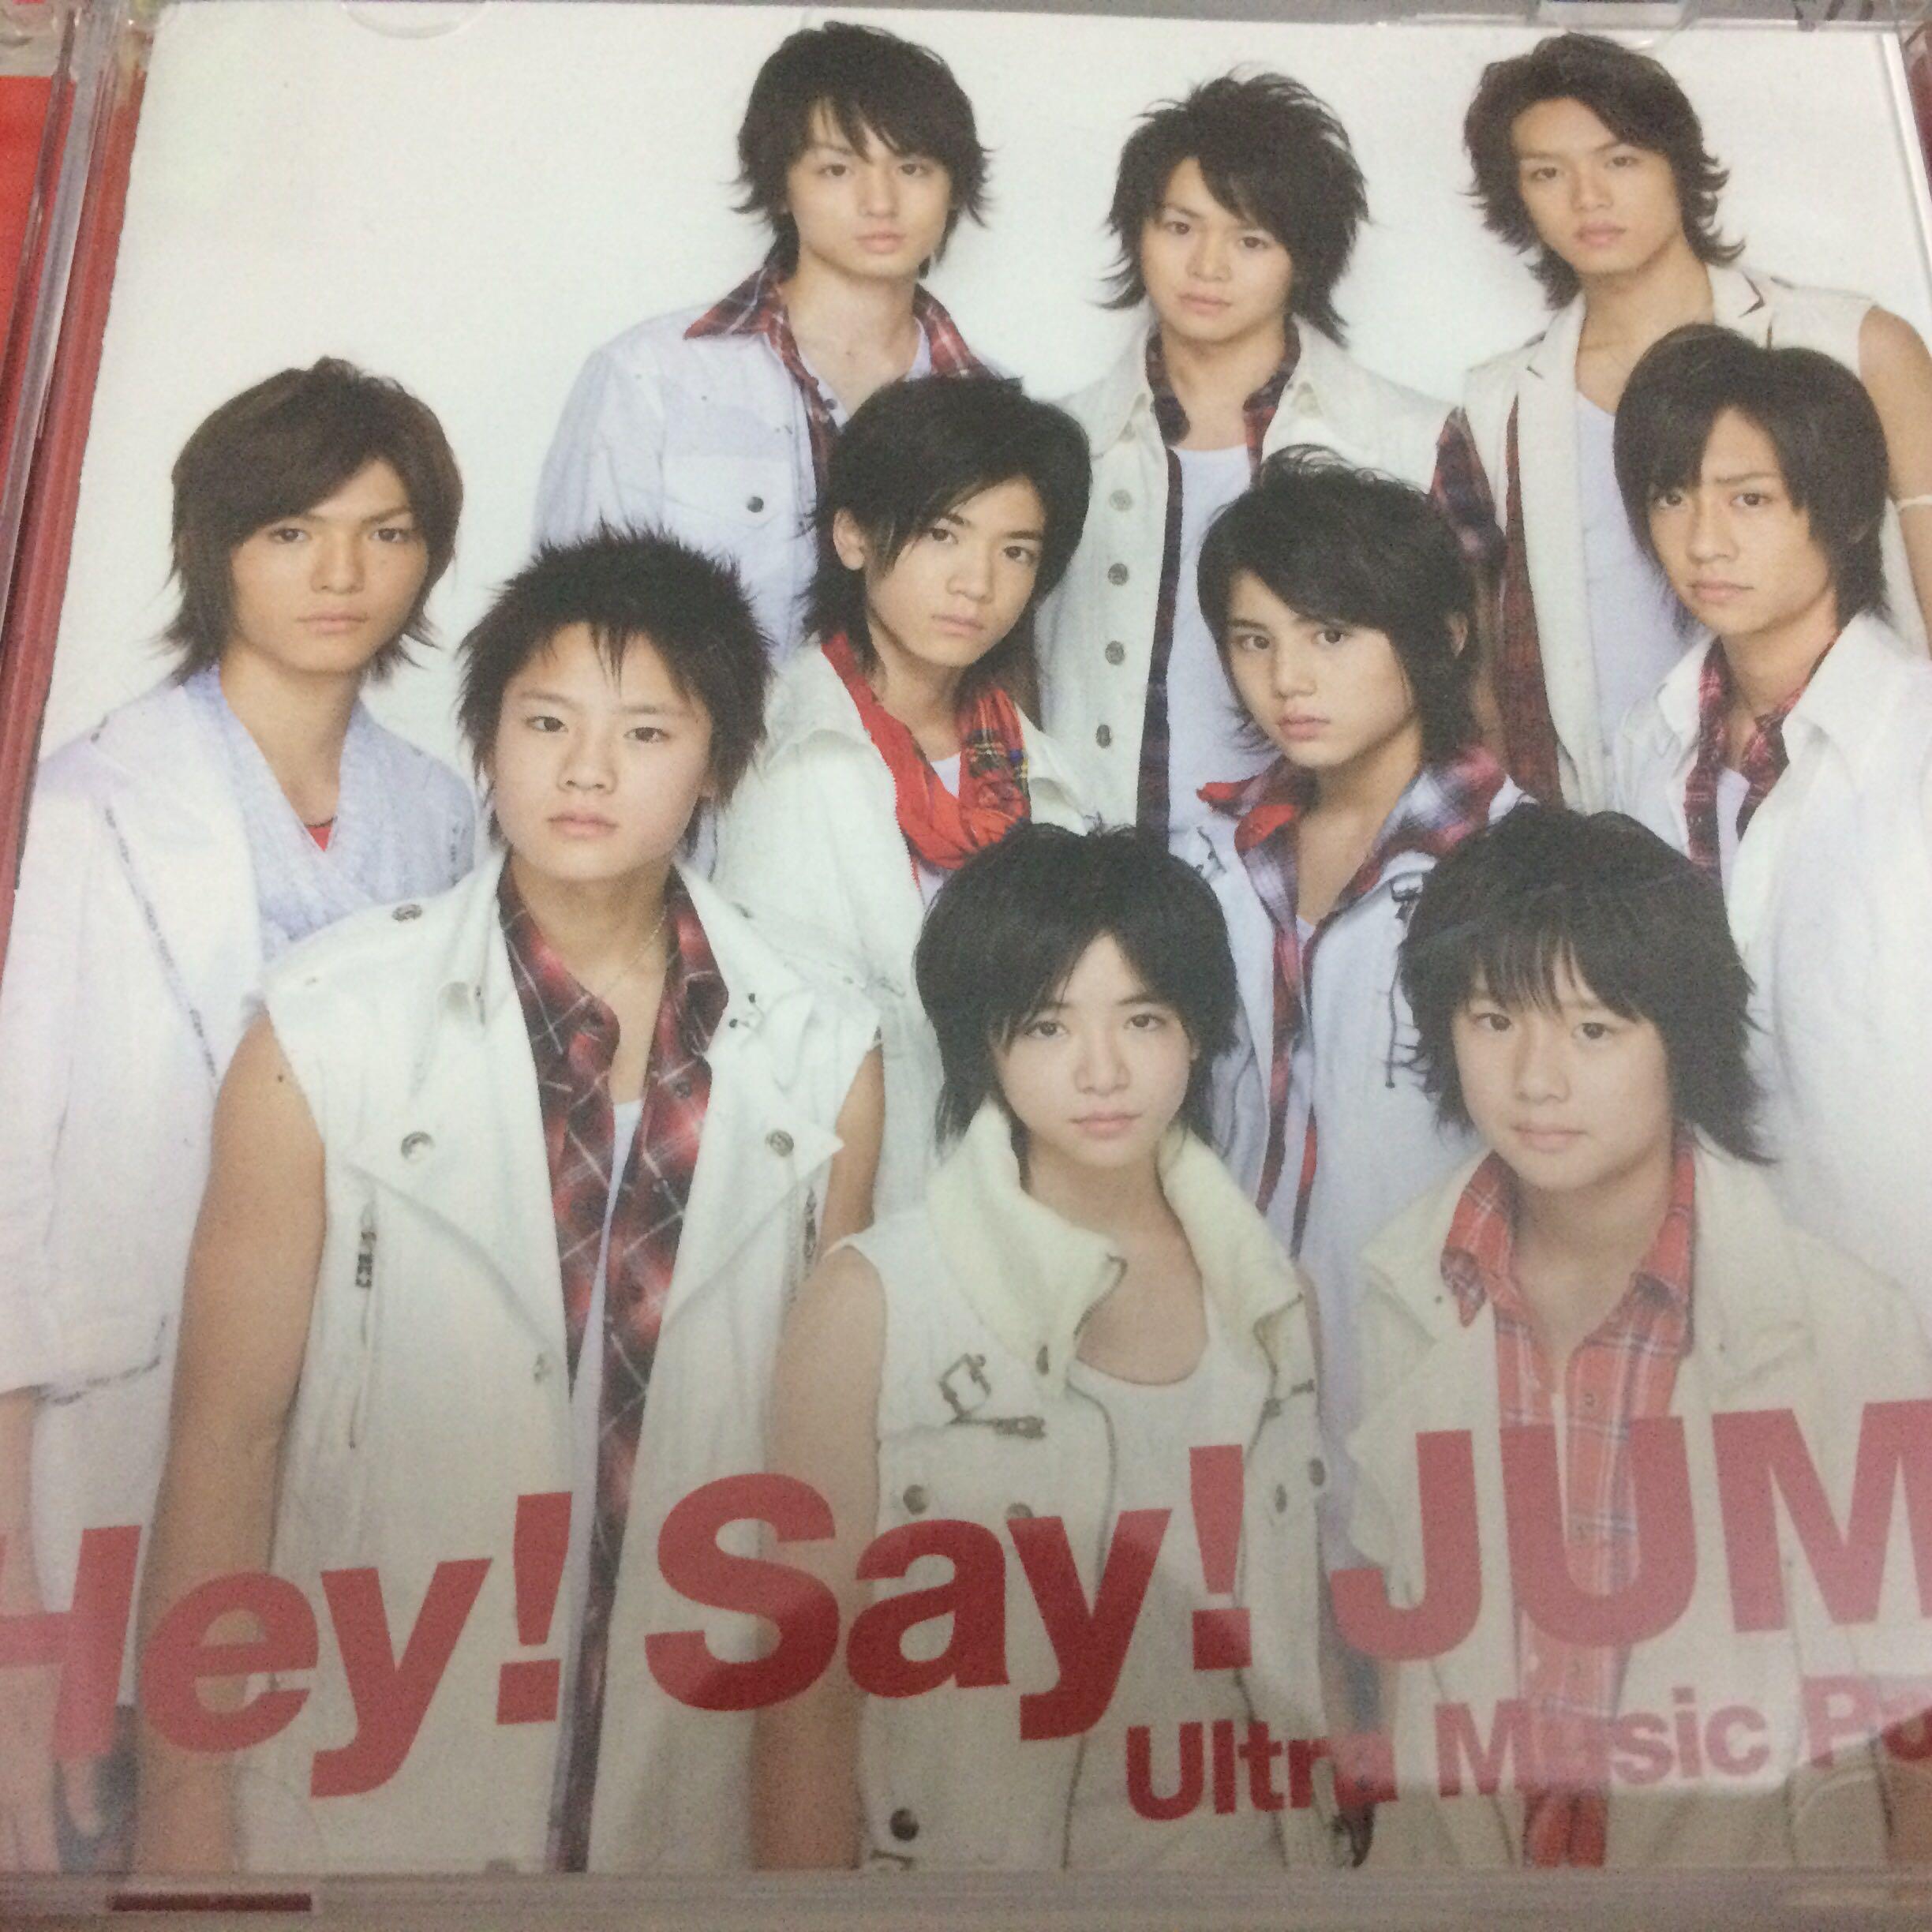 SEAL限定商品】 Hey!Say!JUMP Ultra 初回限定盤DVD Power Music 邦楽 